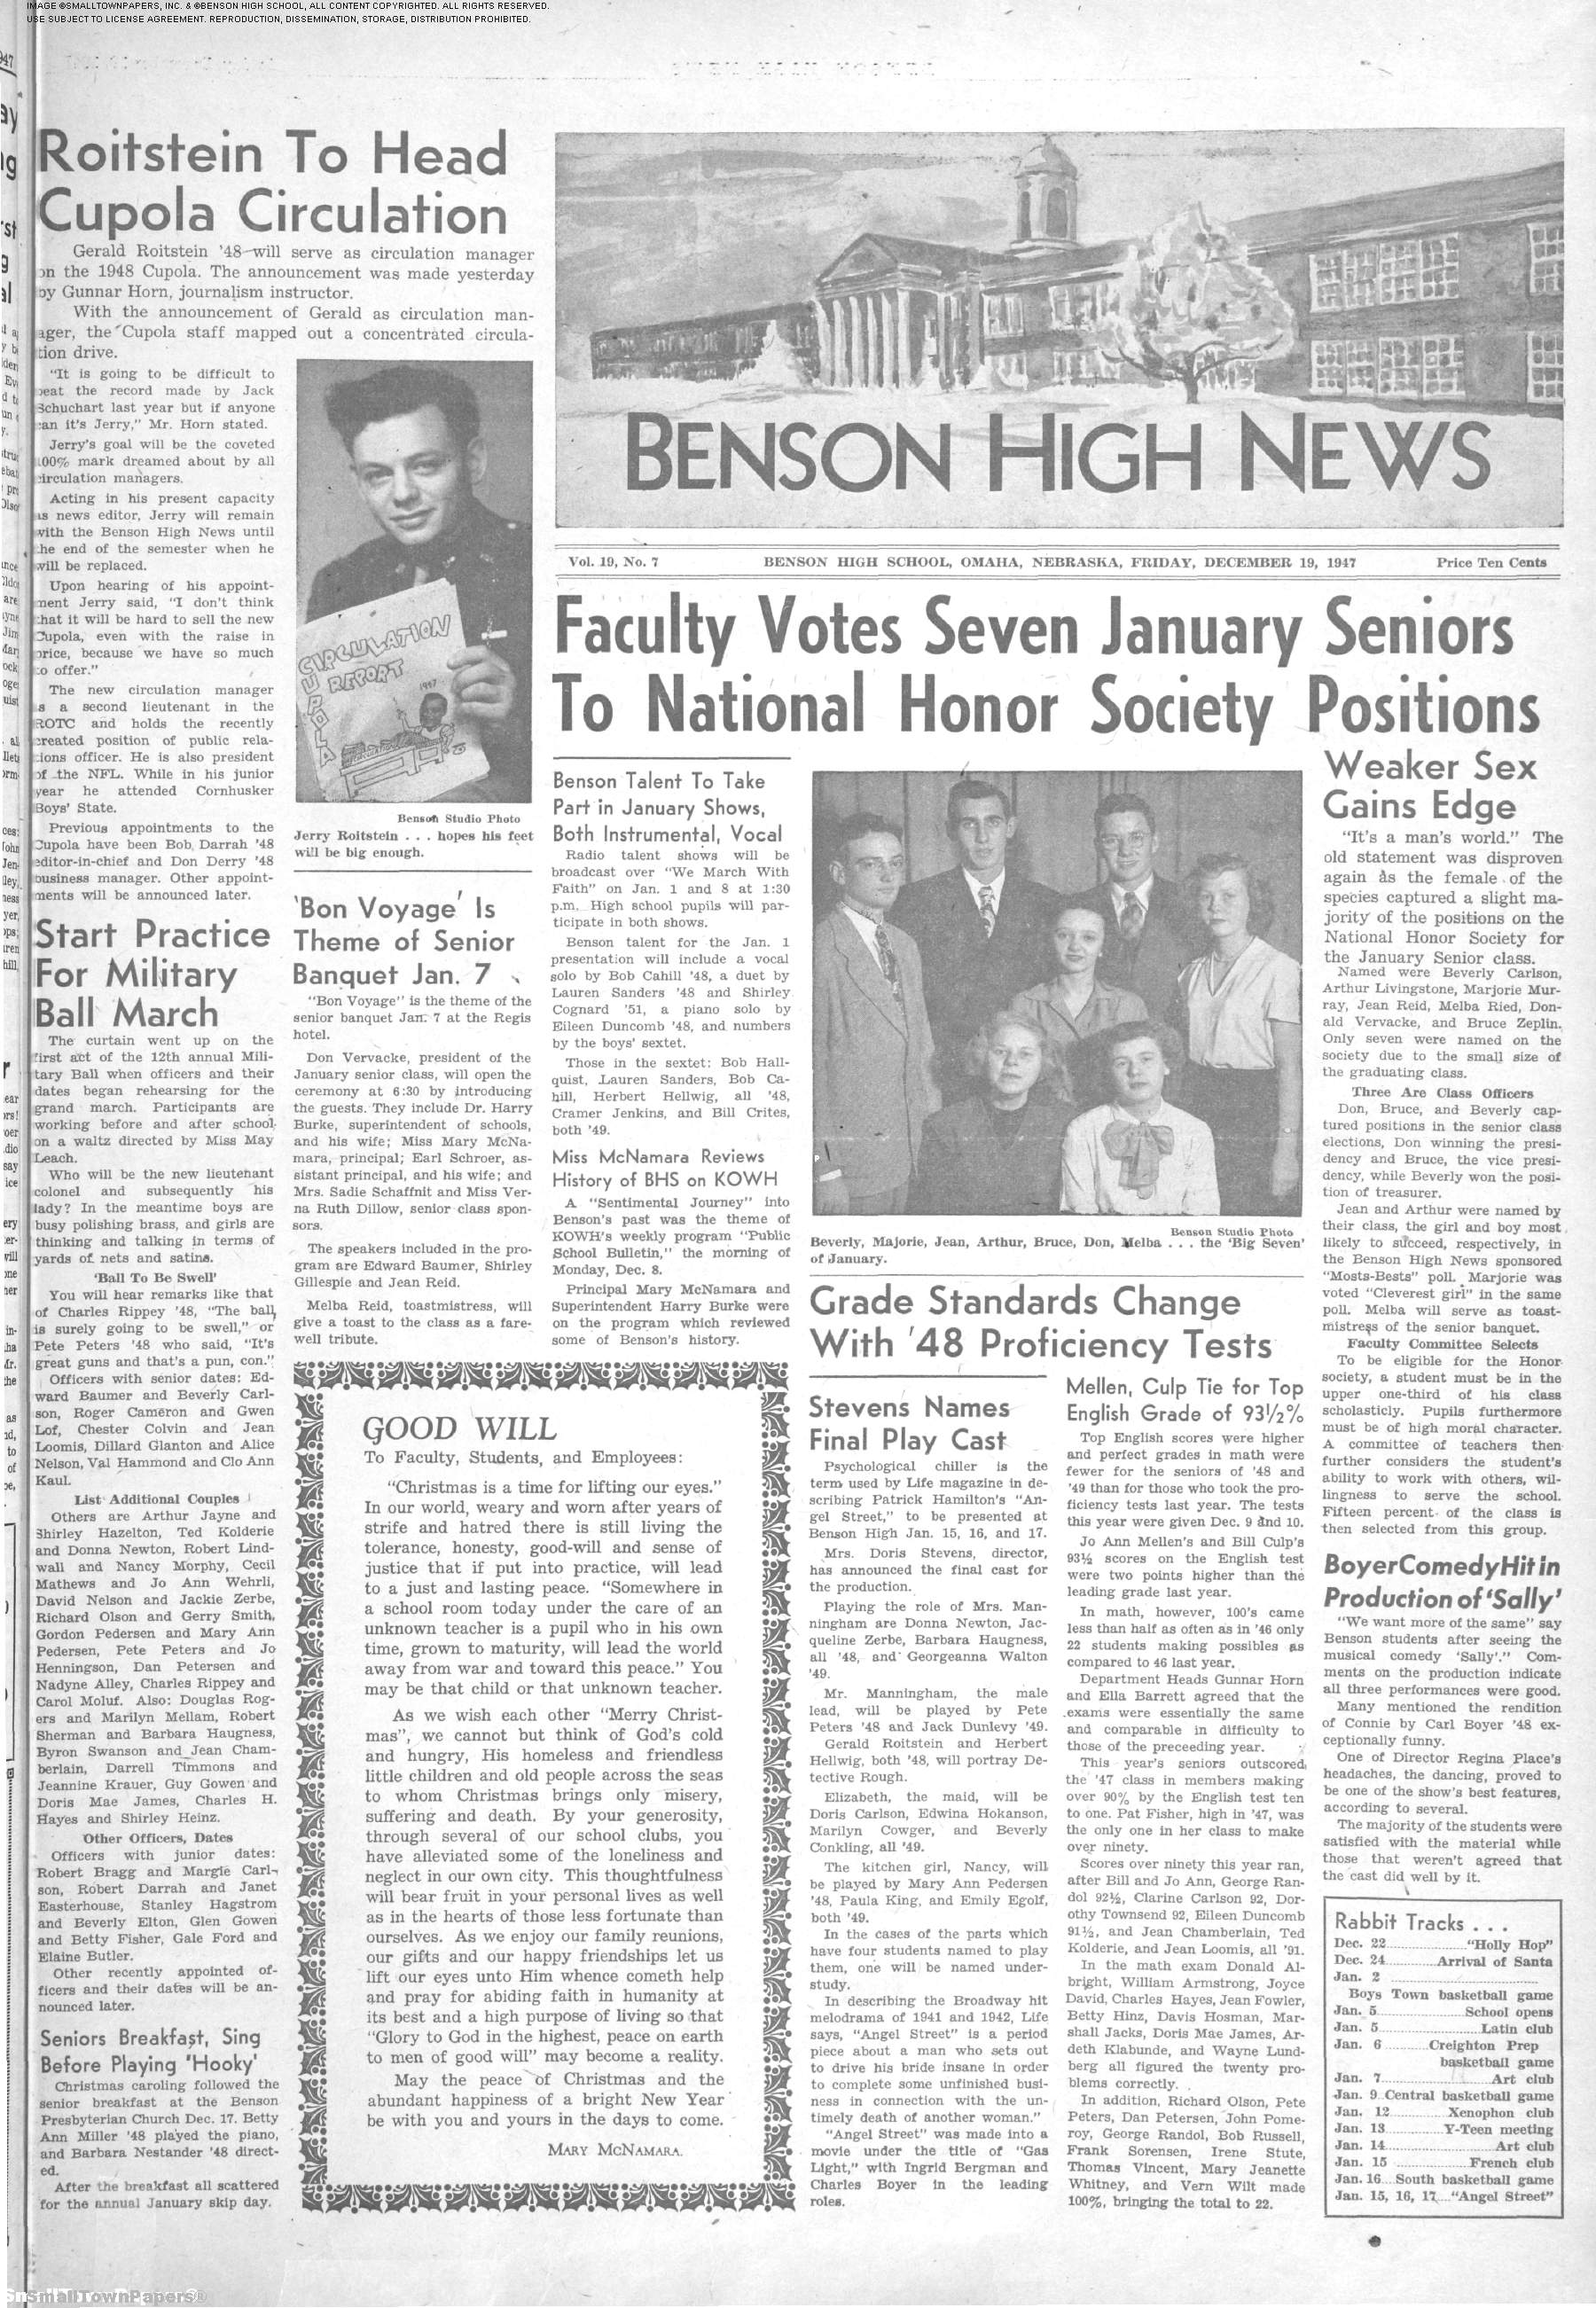 Benson High News December 18, 1947 Page01